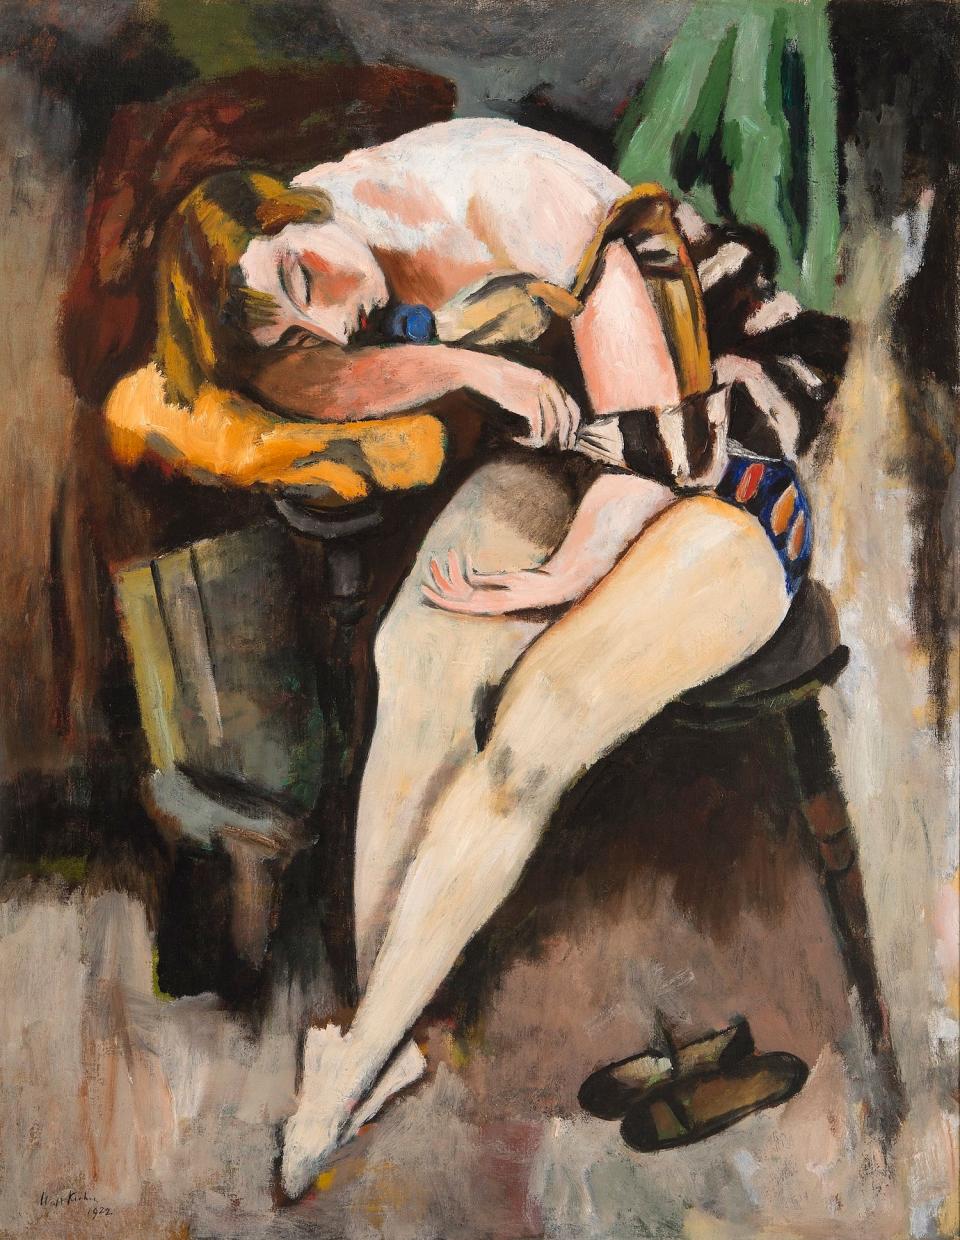 Walt Kuhn, "Sleeping Girl," 1922, oil on canvas.